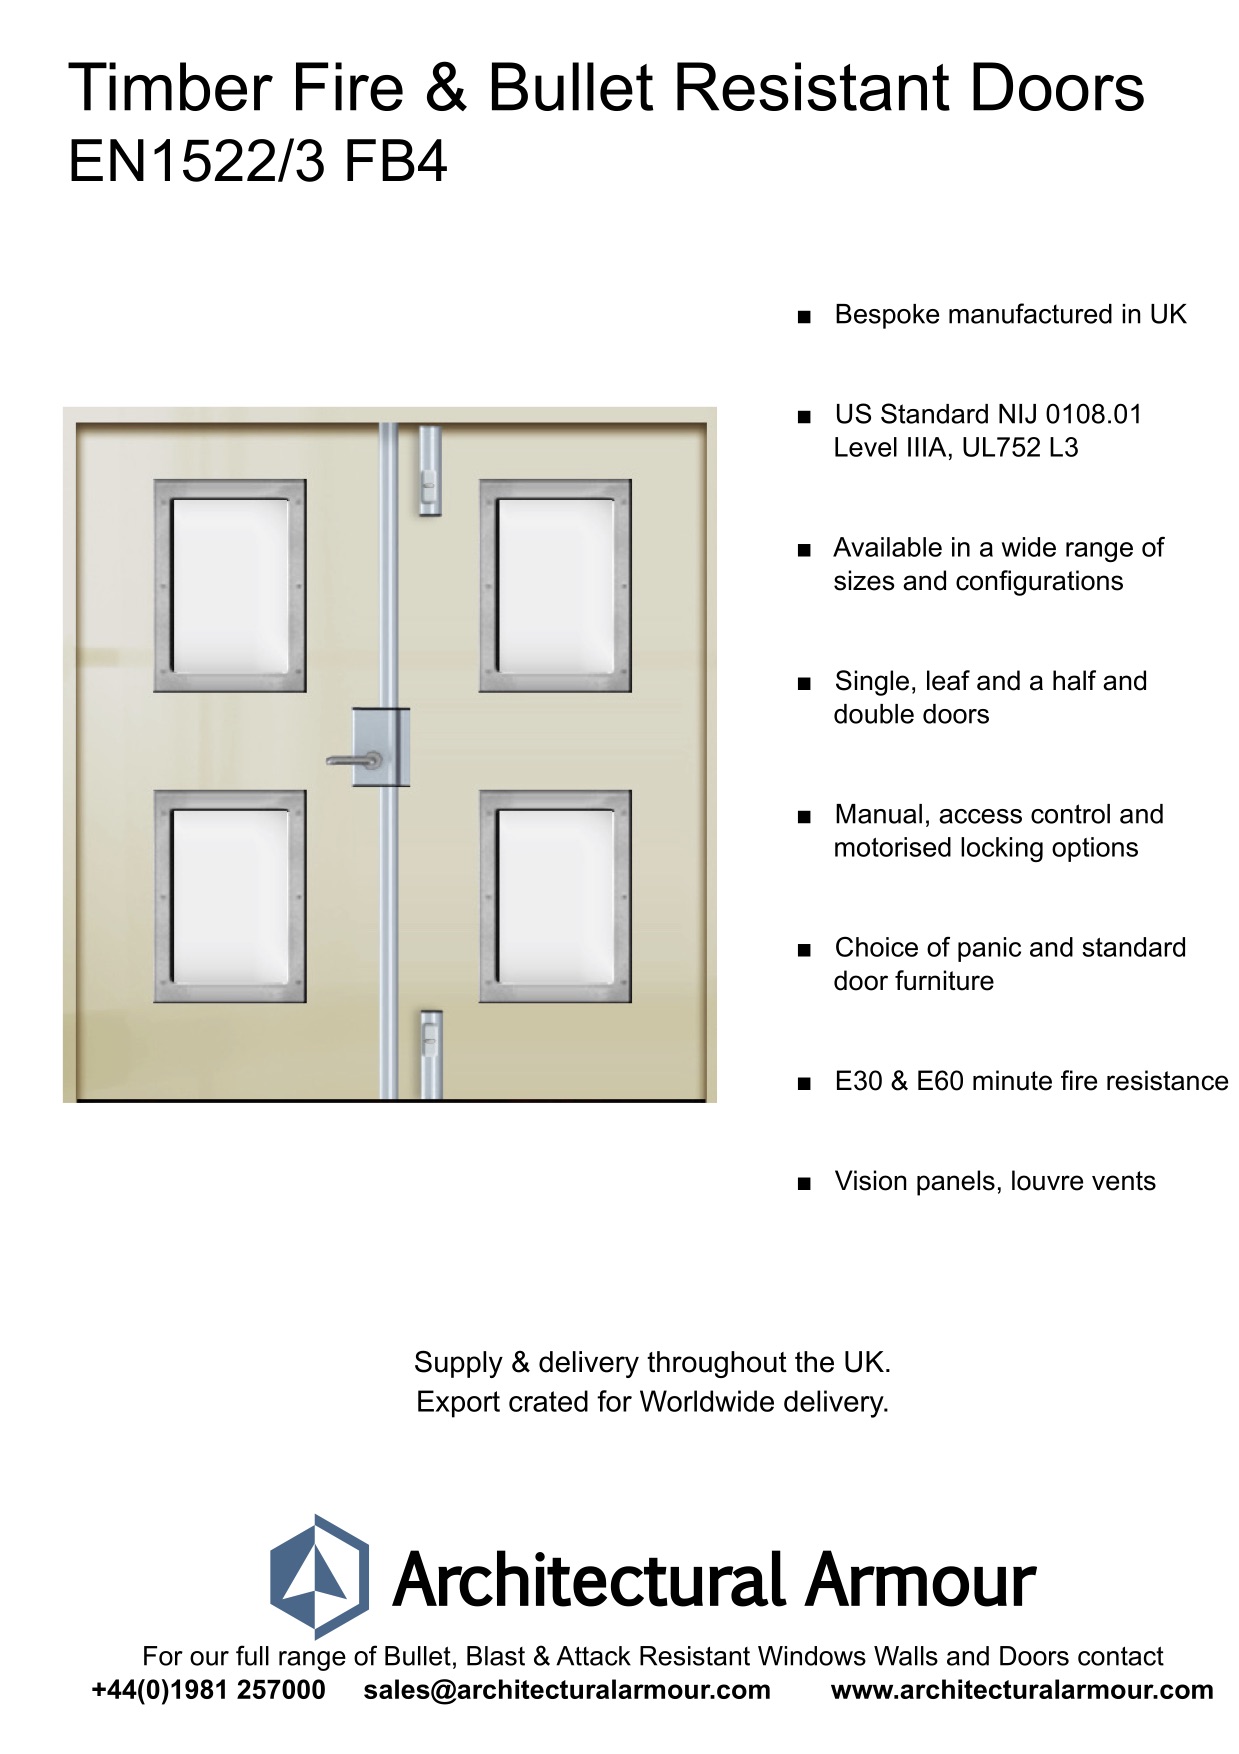 Fire-and-Bullet-Resistant-EN1522-3-FB4-Timber-Doors-Vision-Panels-BR4